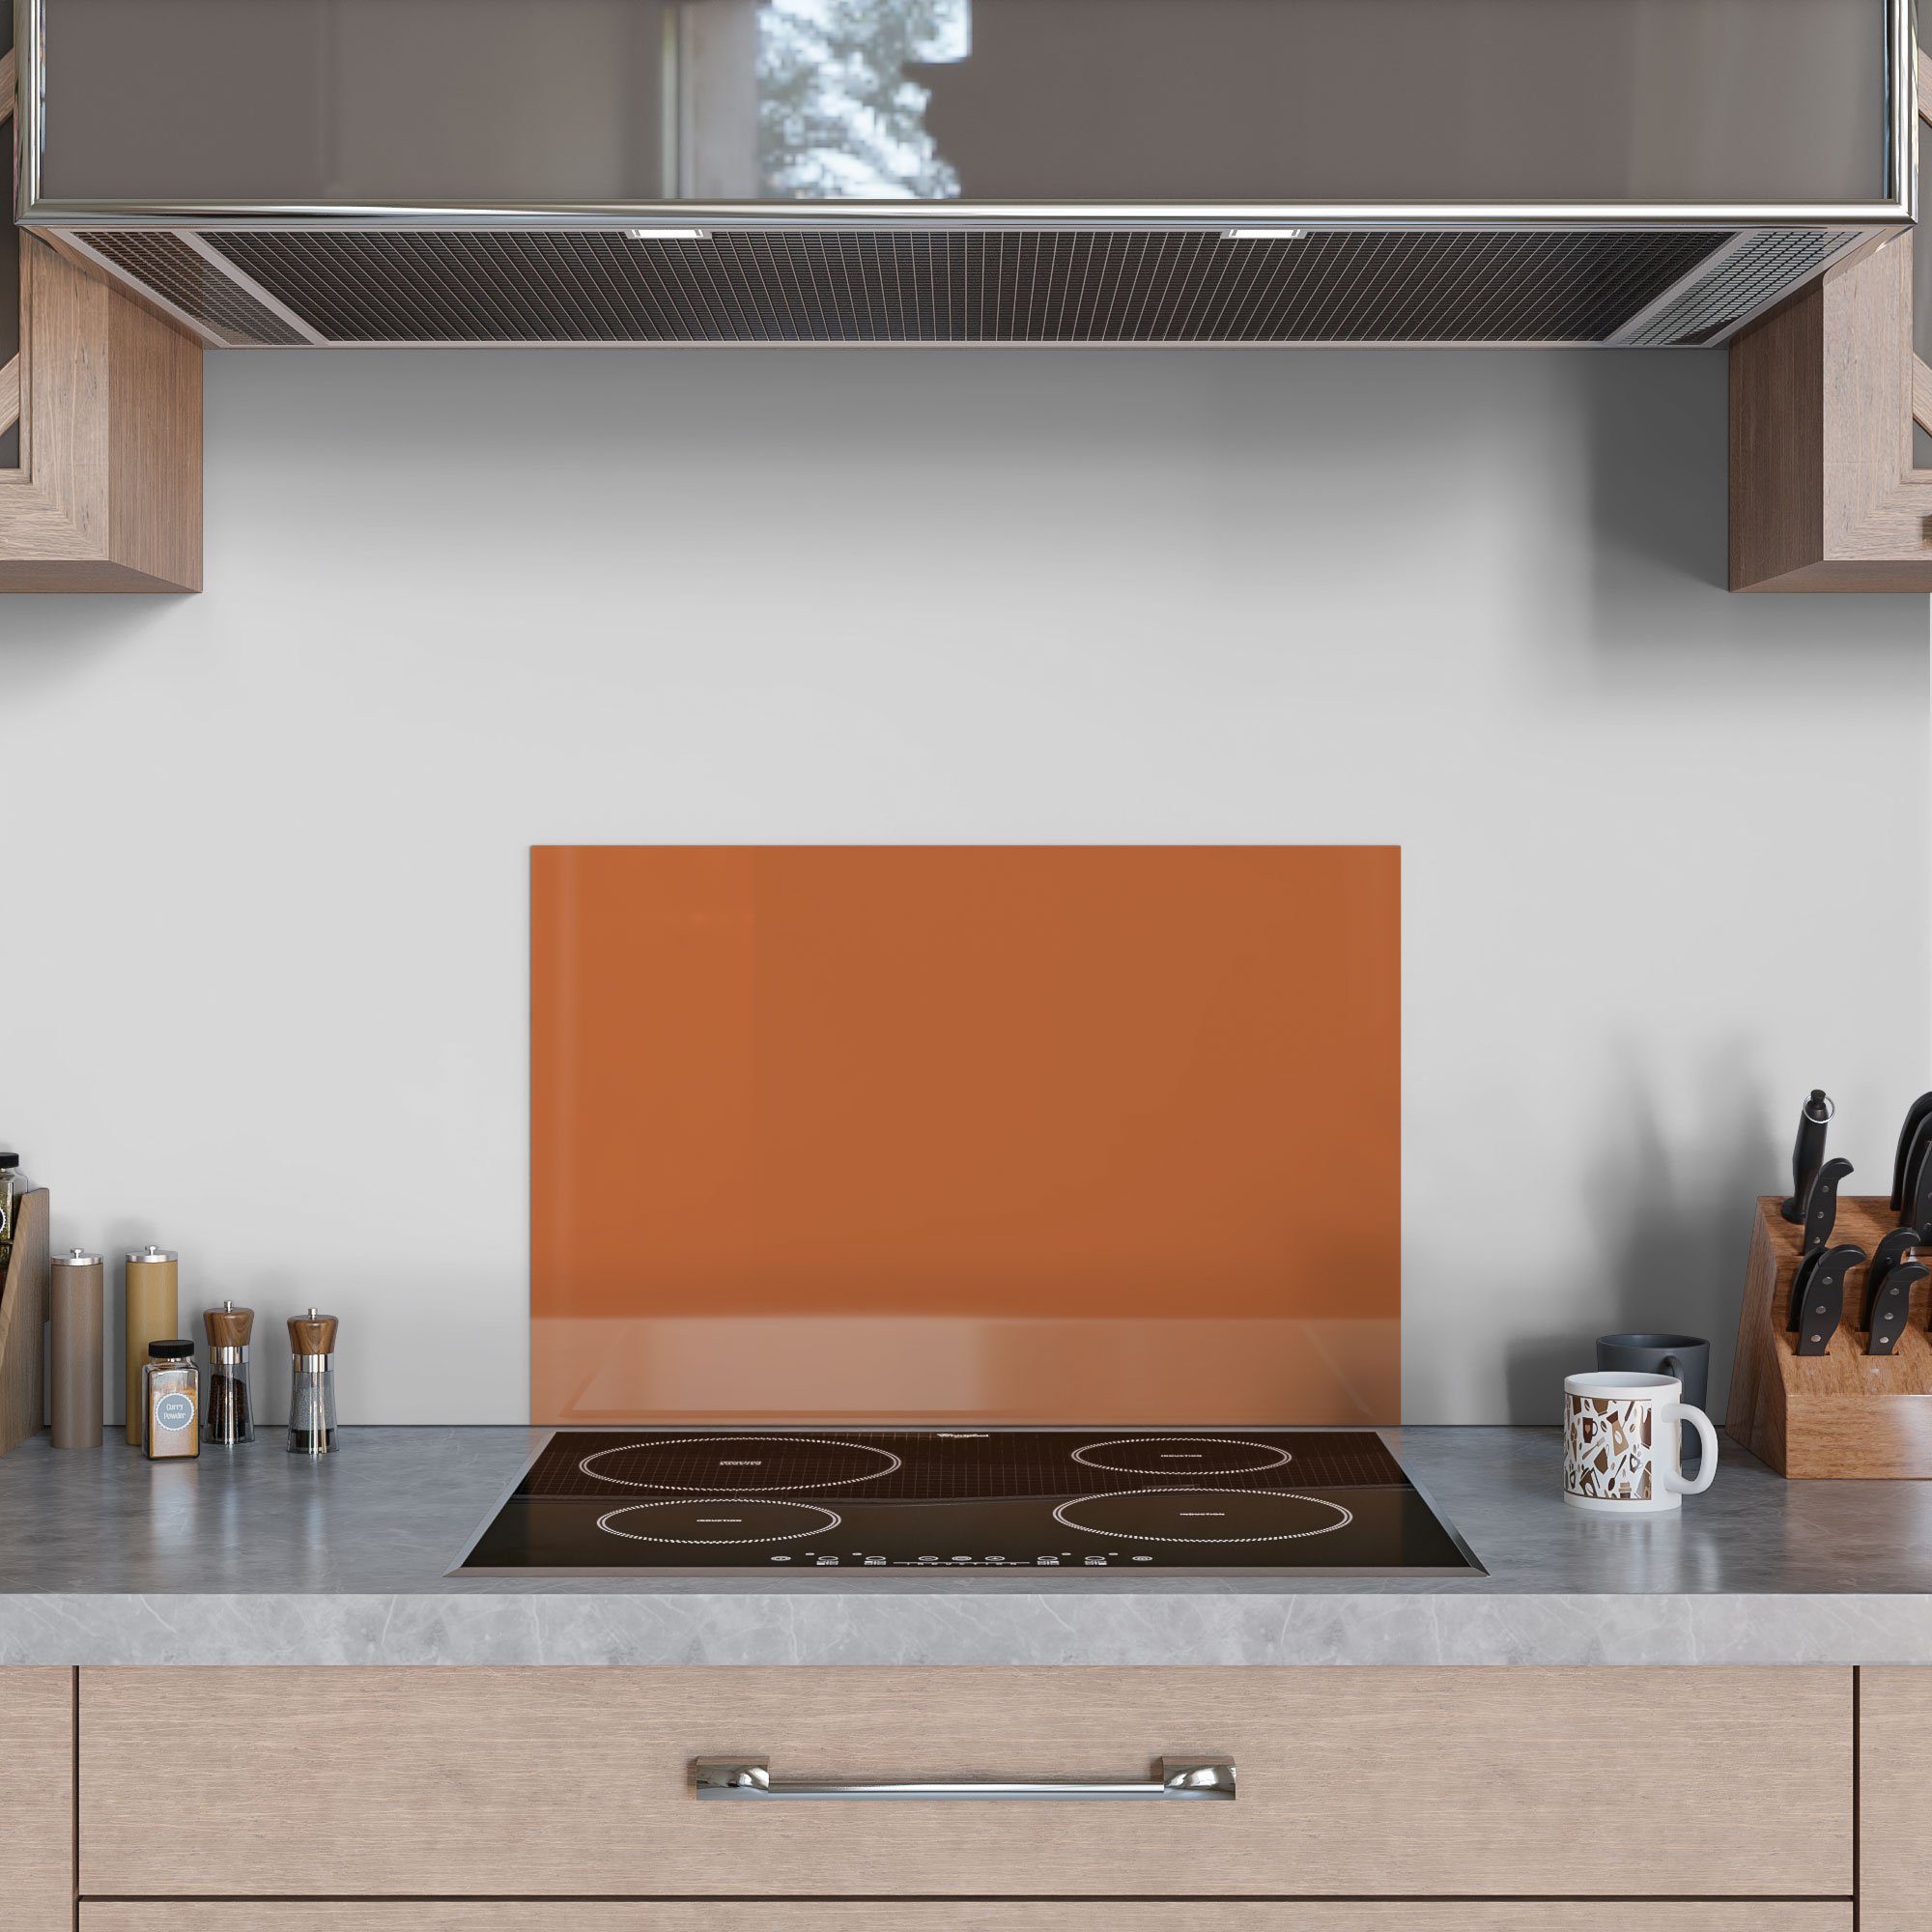 Herdblende Küchenrückwand Spritzschutz DEQORI Terrakotta', Badrückwand 'Unifarben Glas -